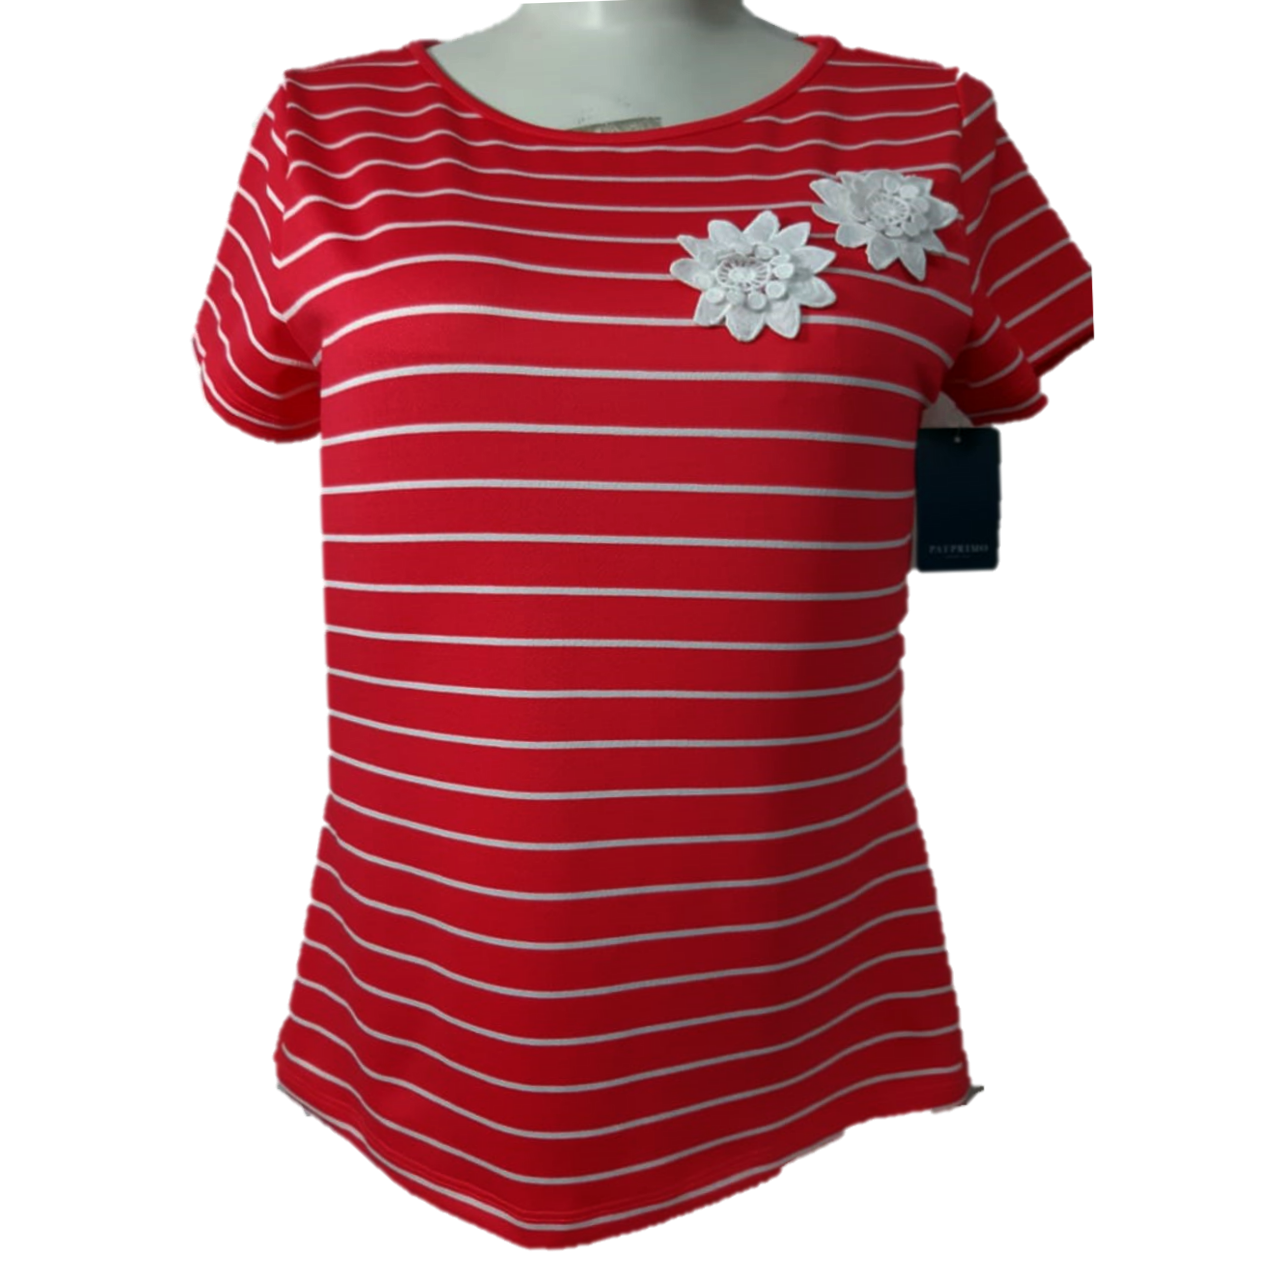 Camiseta flor roja